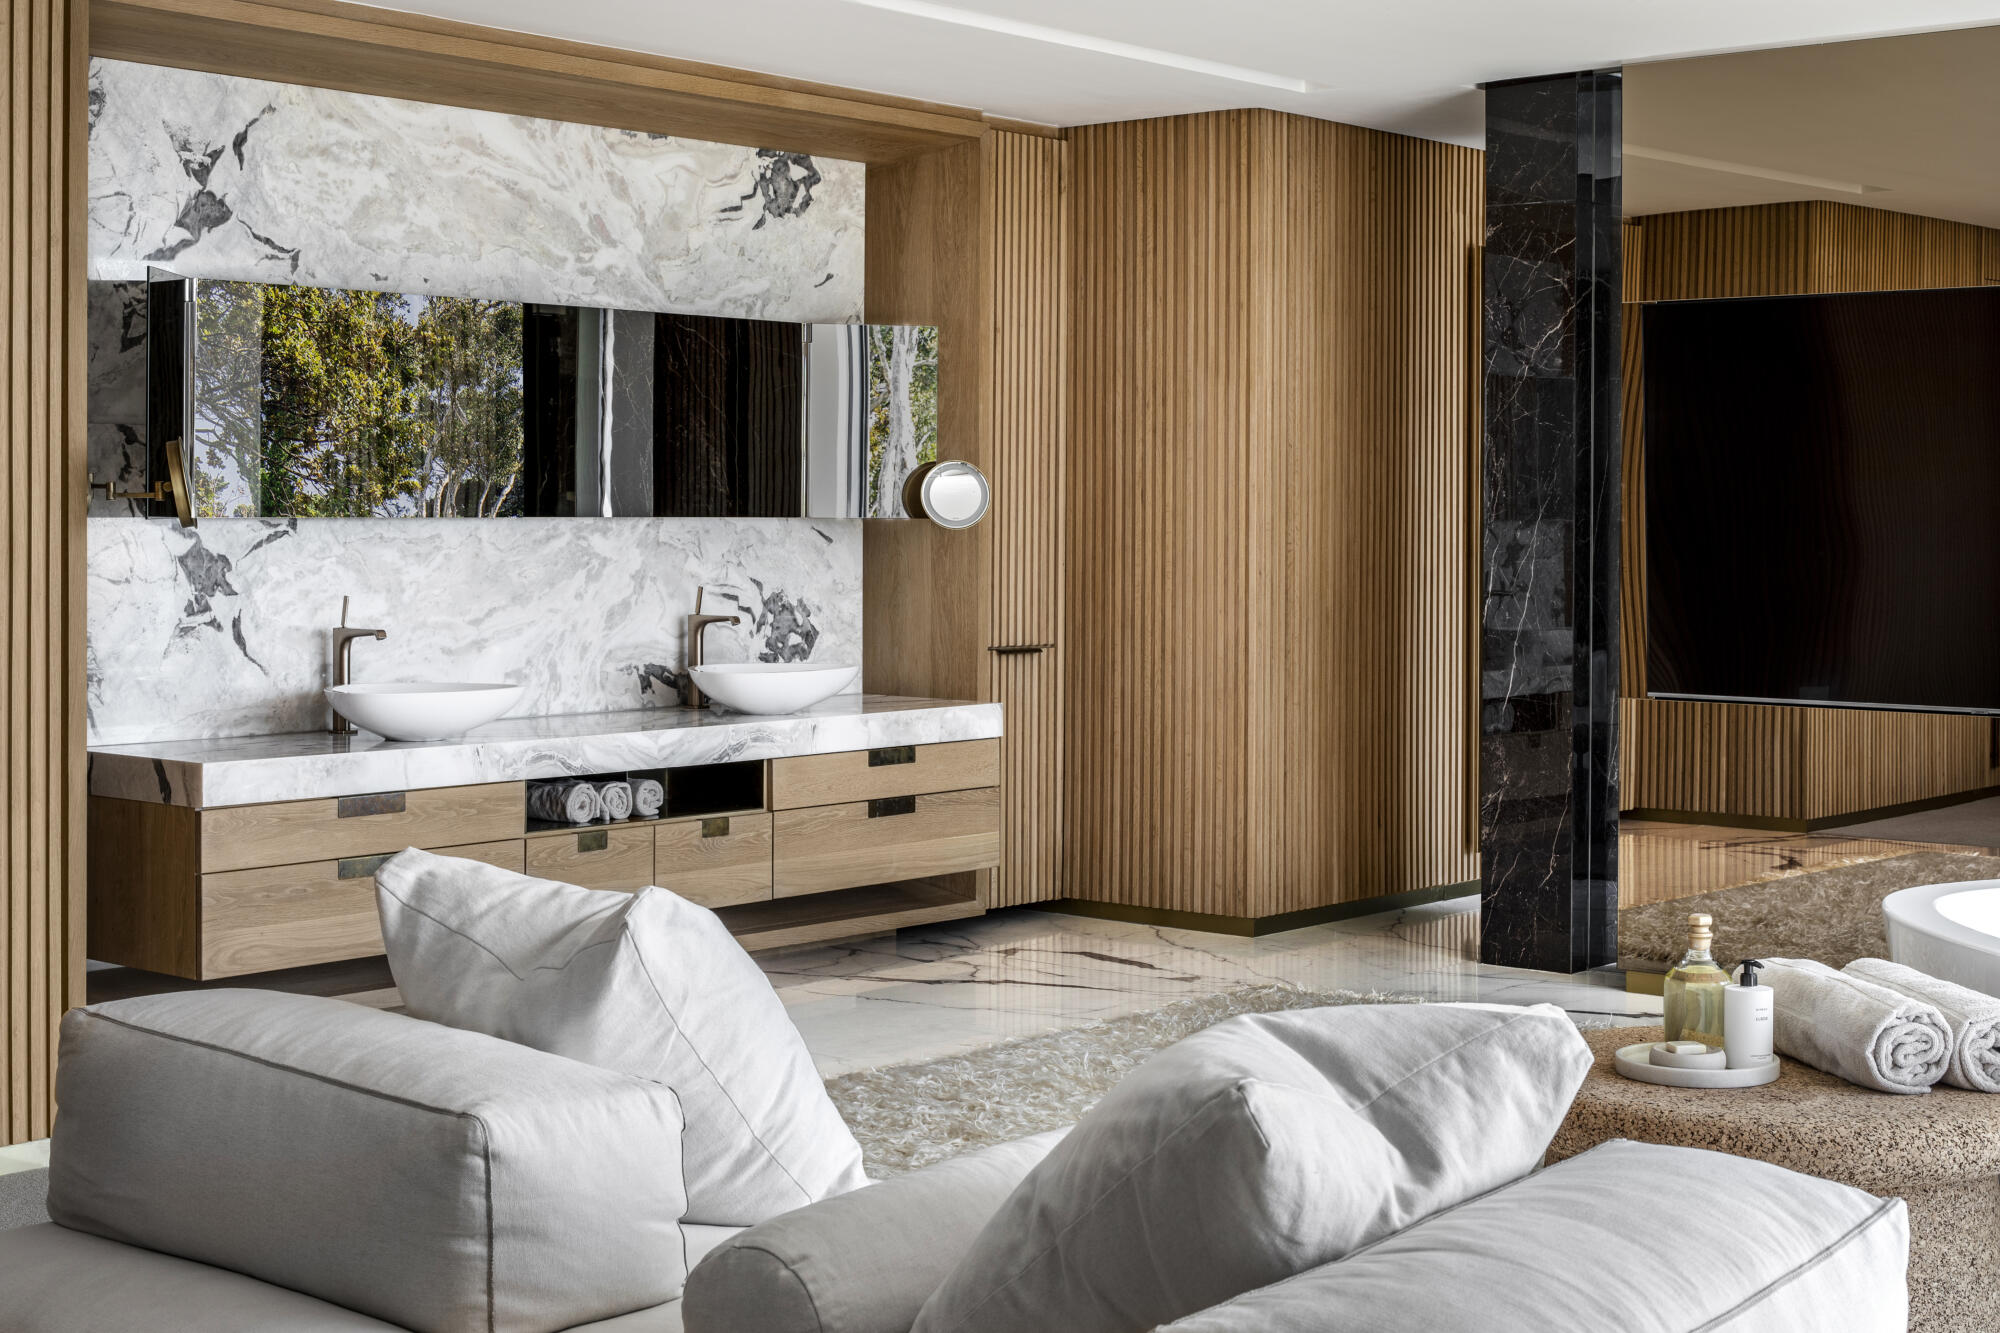 A contemporary design bathroom with Glen Villa marble walls, showcasing nature's splendor and featuring a luxurious bathtub.